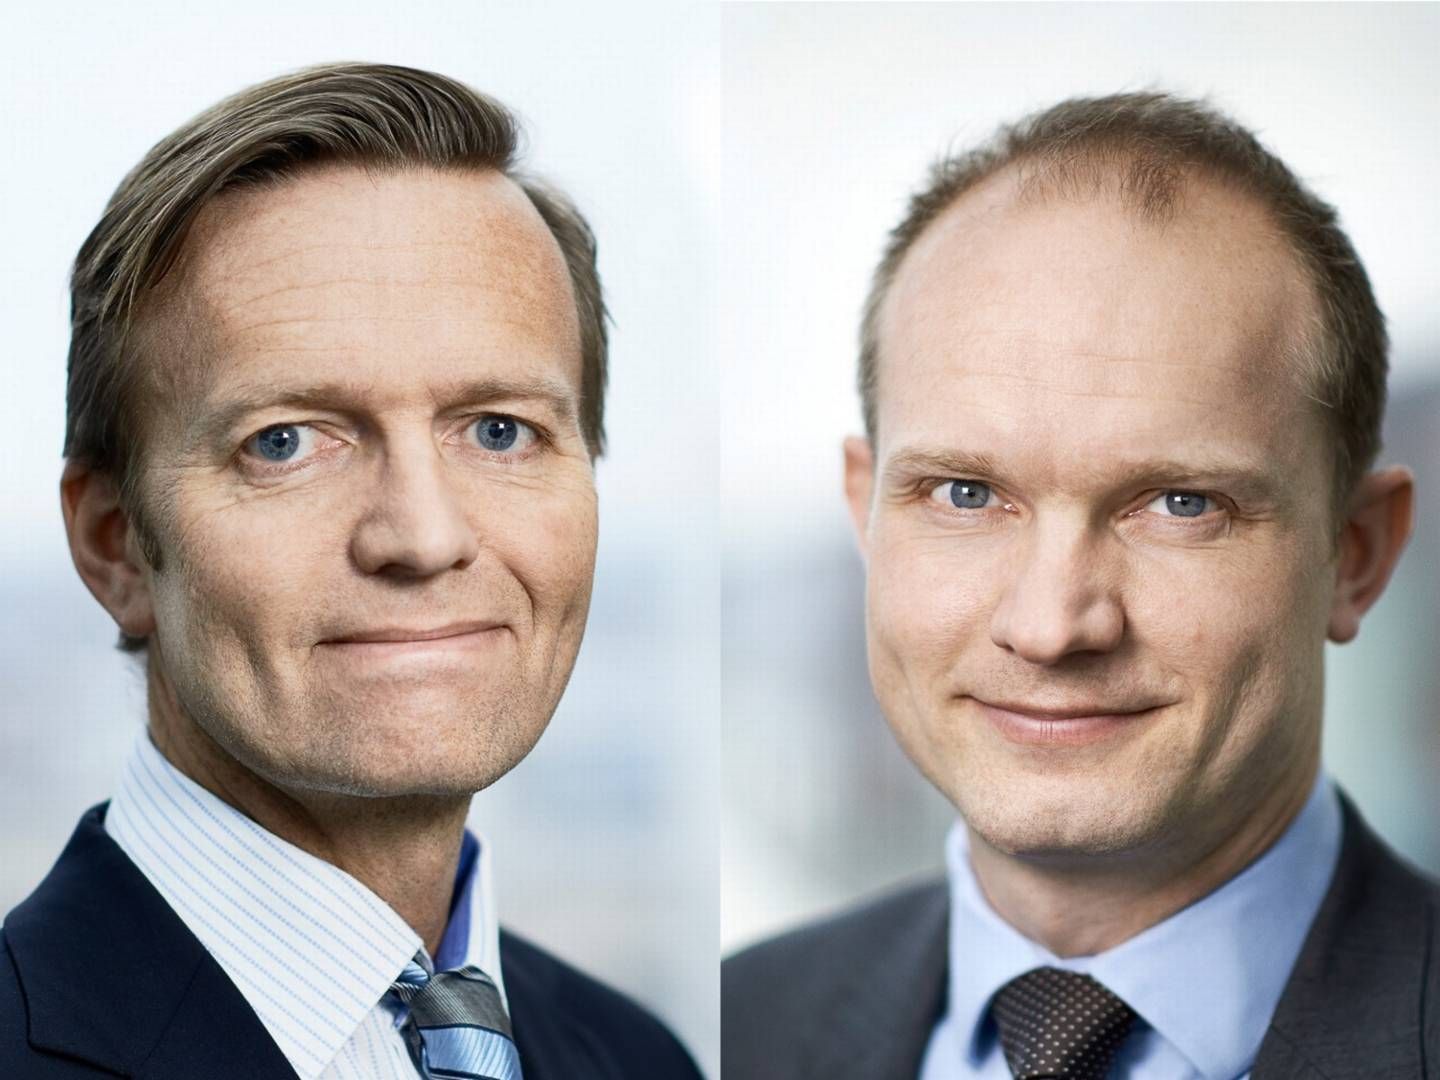 Nicolaj Holm-Christiansen (left) is CCO at BankInvest. The Emerging Market Corporate Debt team is headed by Chief Portfolio Manager Søren Bertelsen and Senior Portfolio Manager Chresten Hagelund.